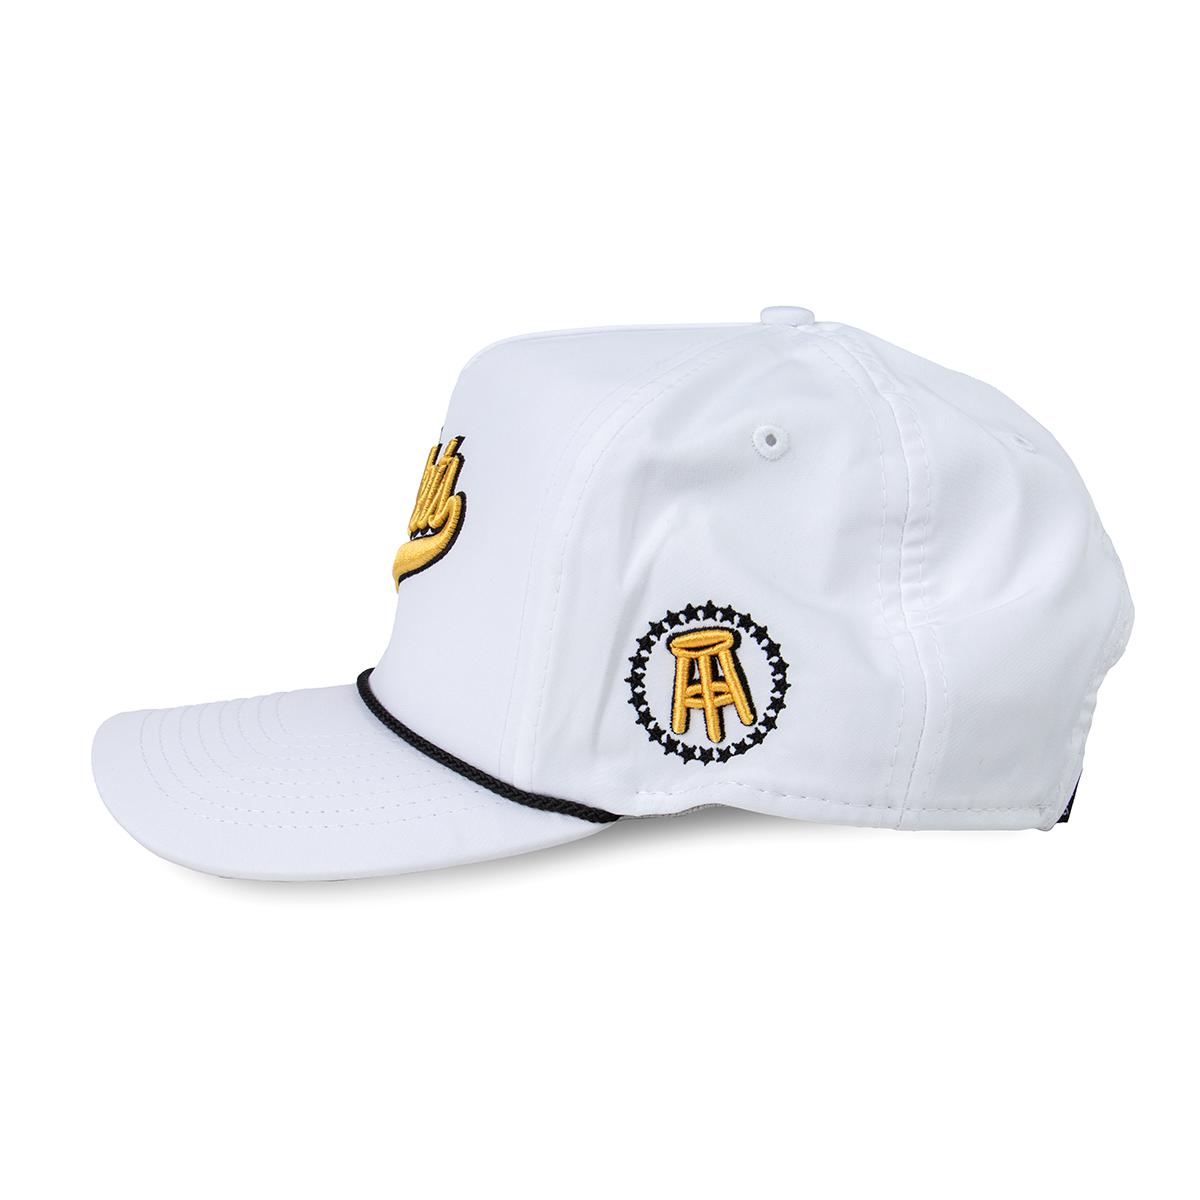 Spittin Chiclets Varsity Imperial Rope Snapback Hat-Hats-Spittin Chiclets-White-One Size-Barstool Sports